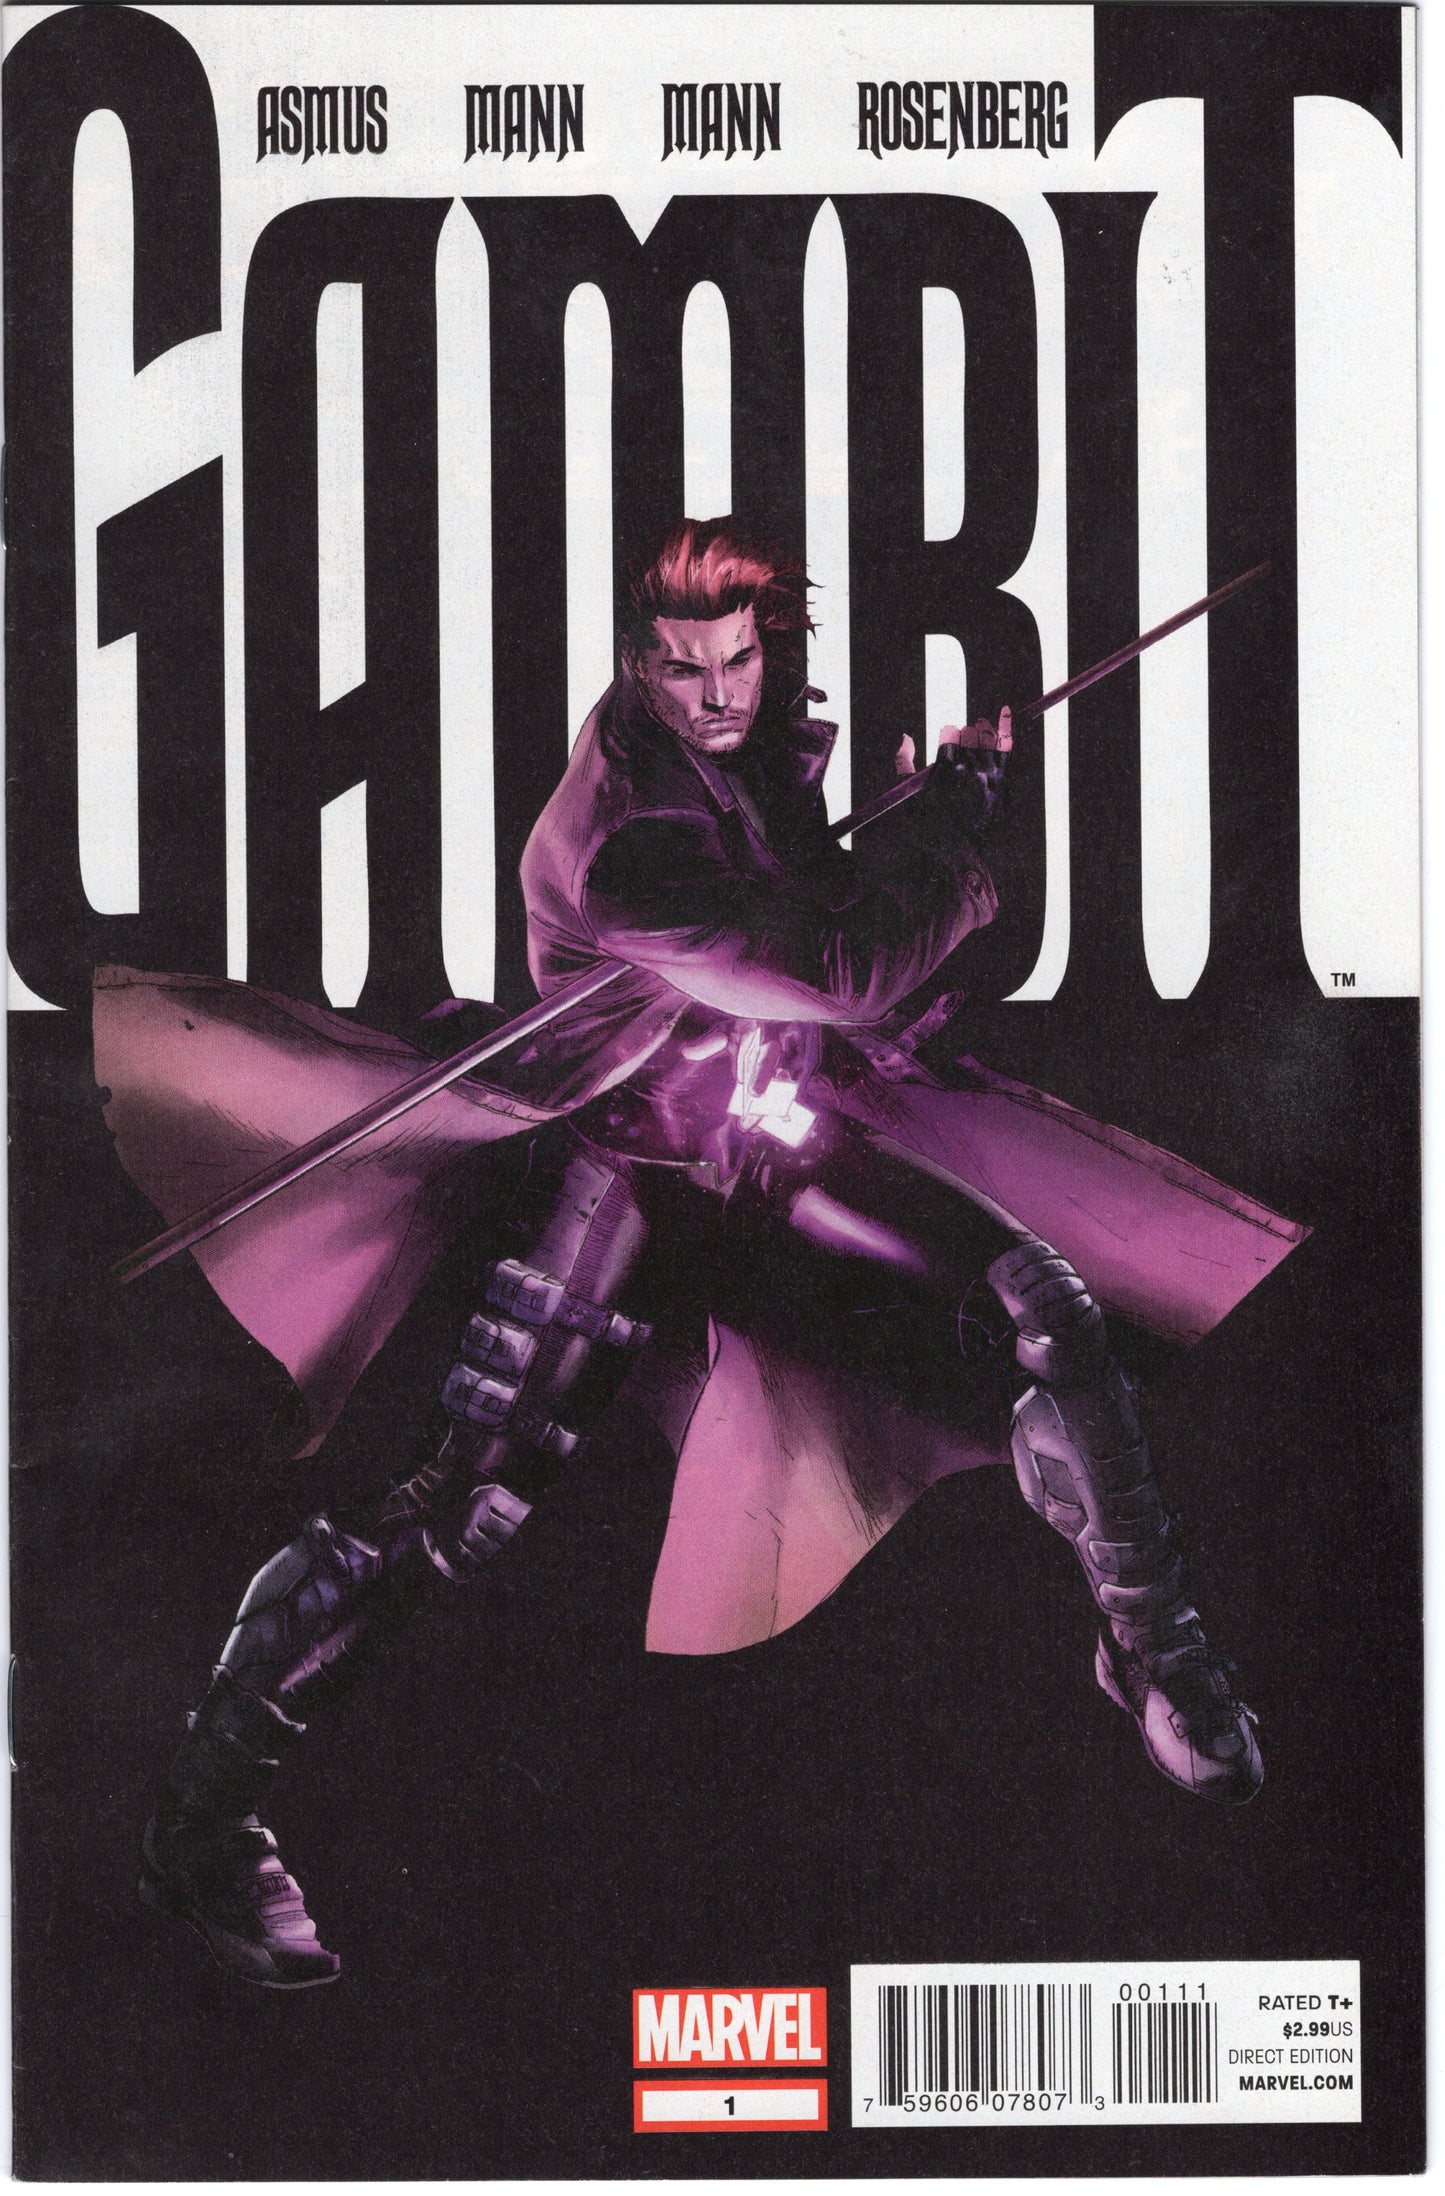 Gambit Issue #1 (Oct. 2012, Marvel Comics) VF/NM